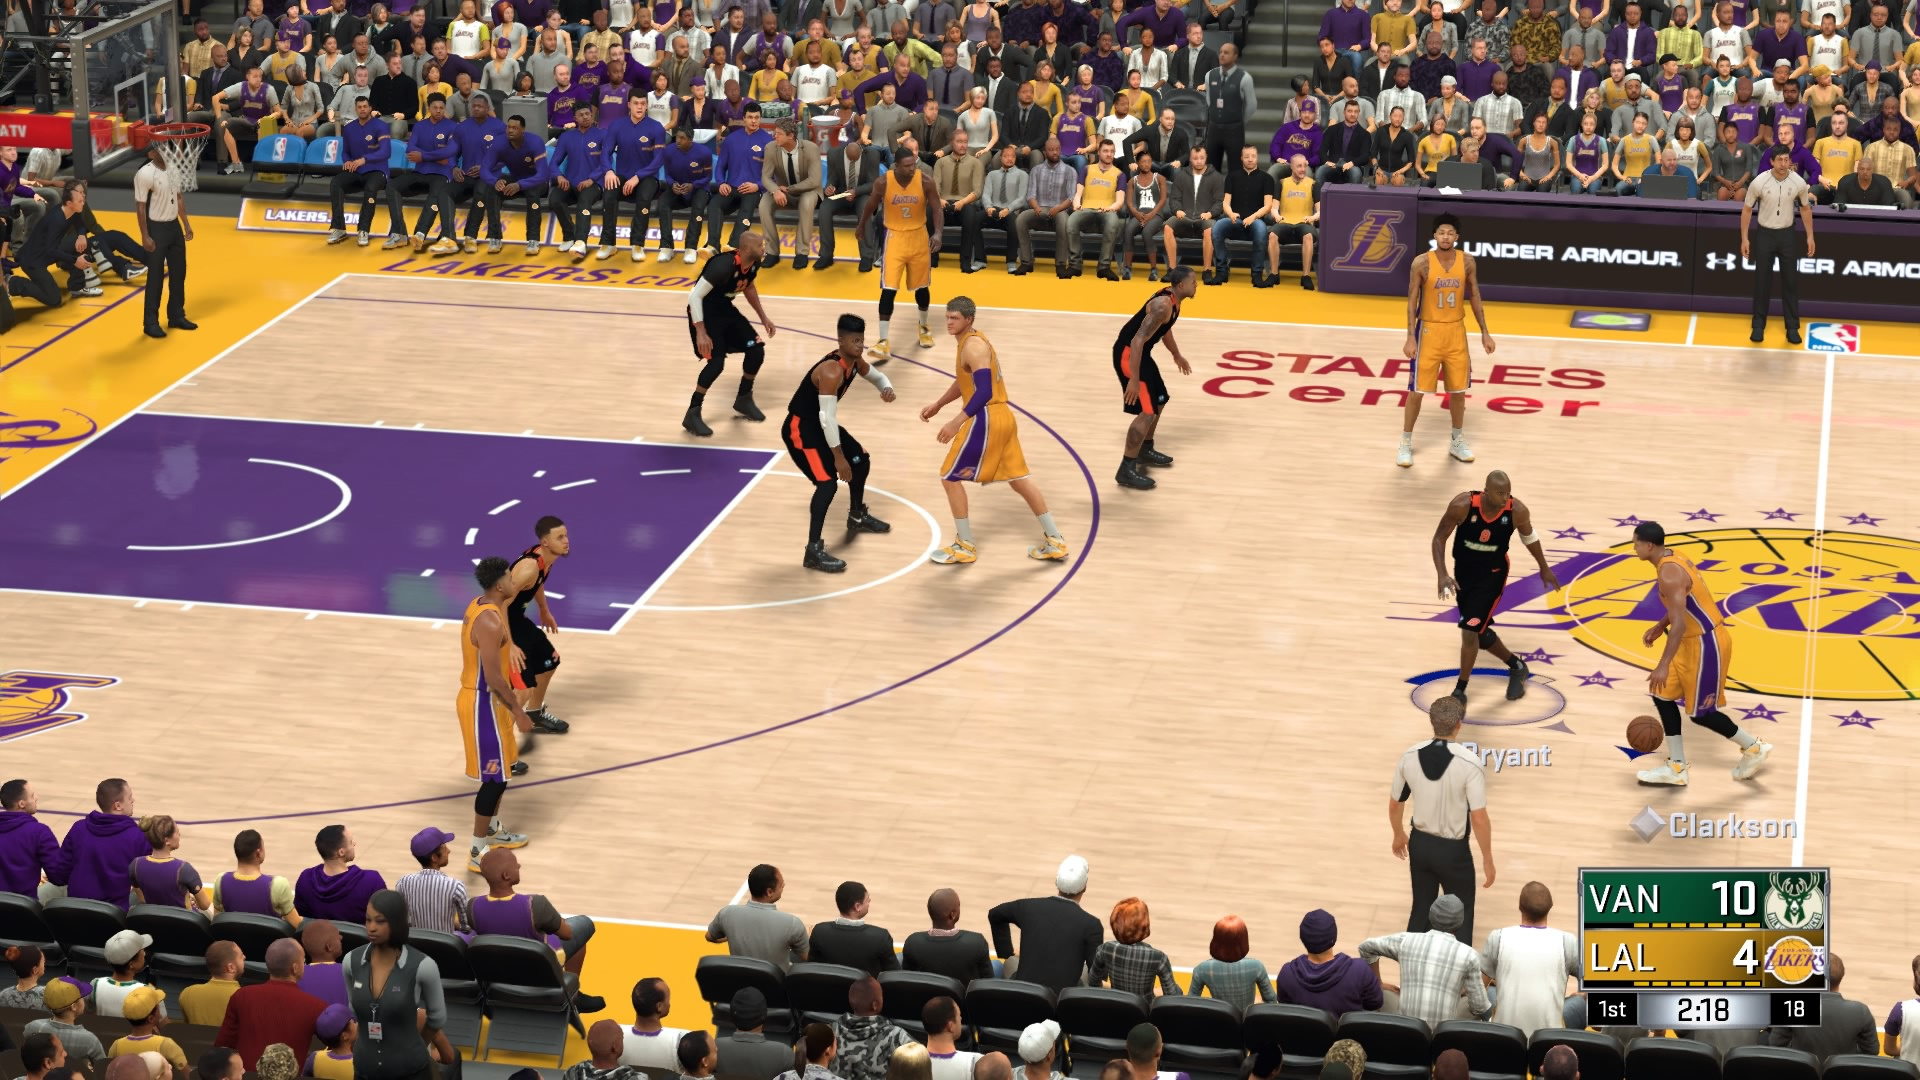 NBA 2K17 (PS4 / PlayStation 4) Screenshots1920 x 1080